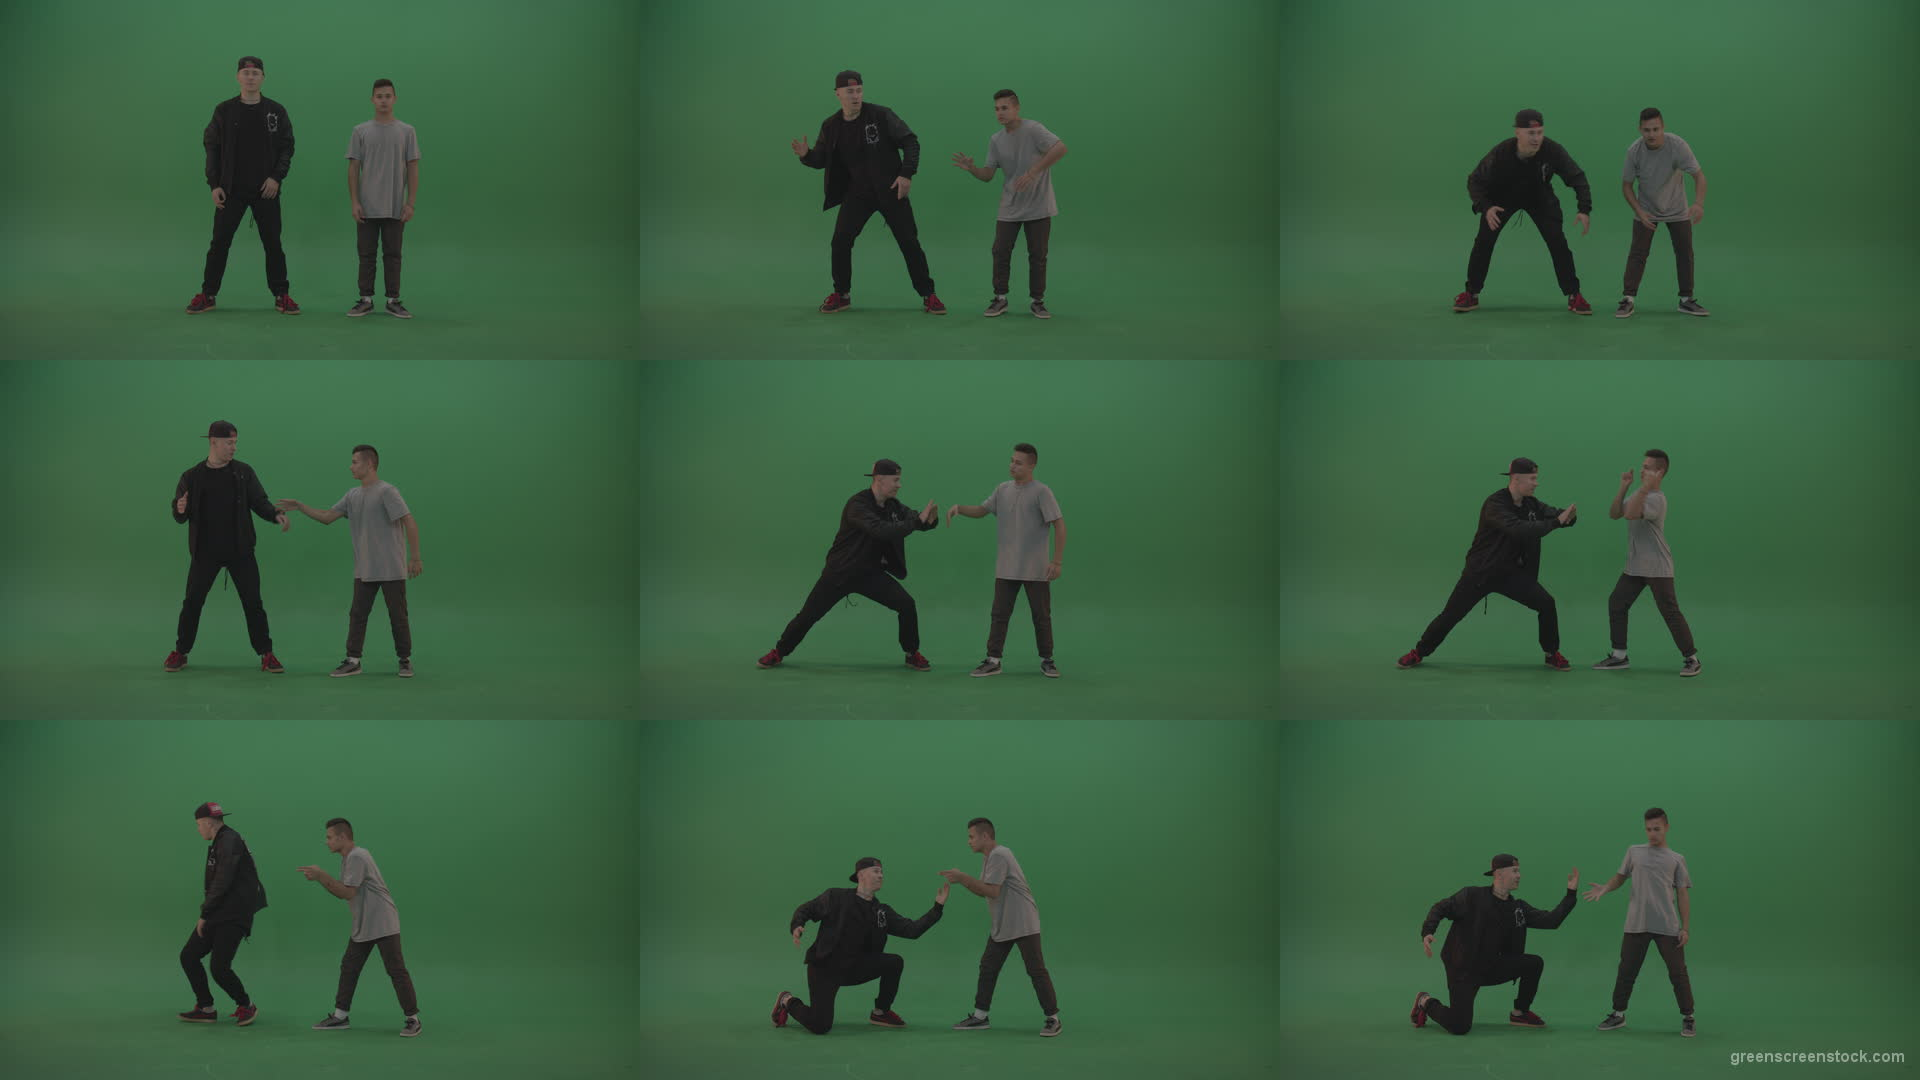 Robotic-moves-break-dancing-2-boys-over-green-background Green Screen Stock